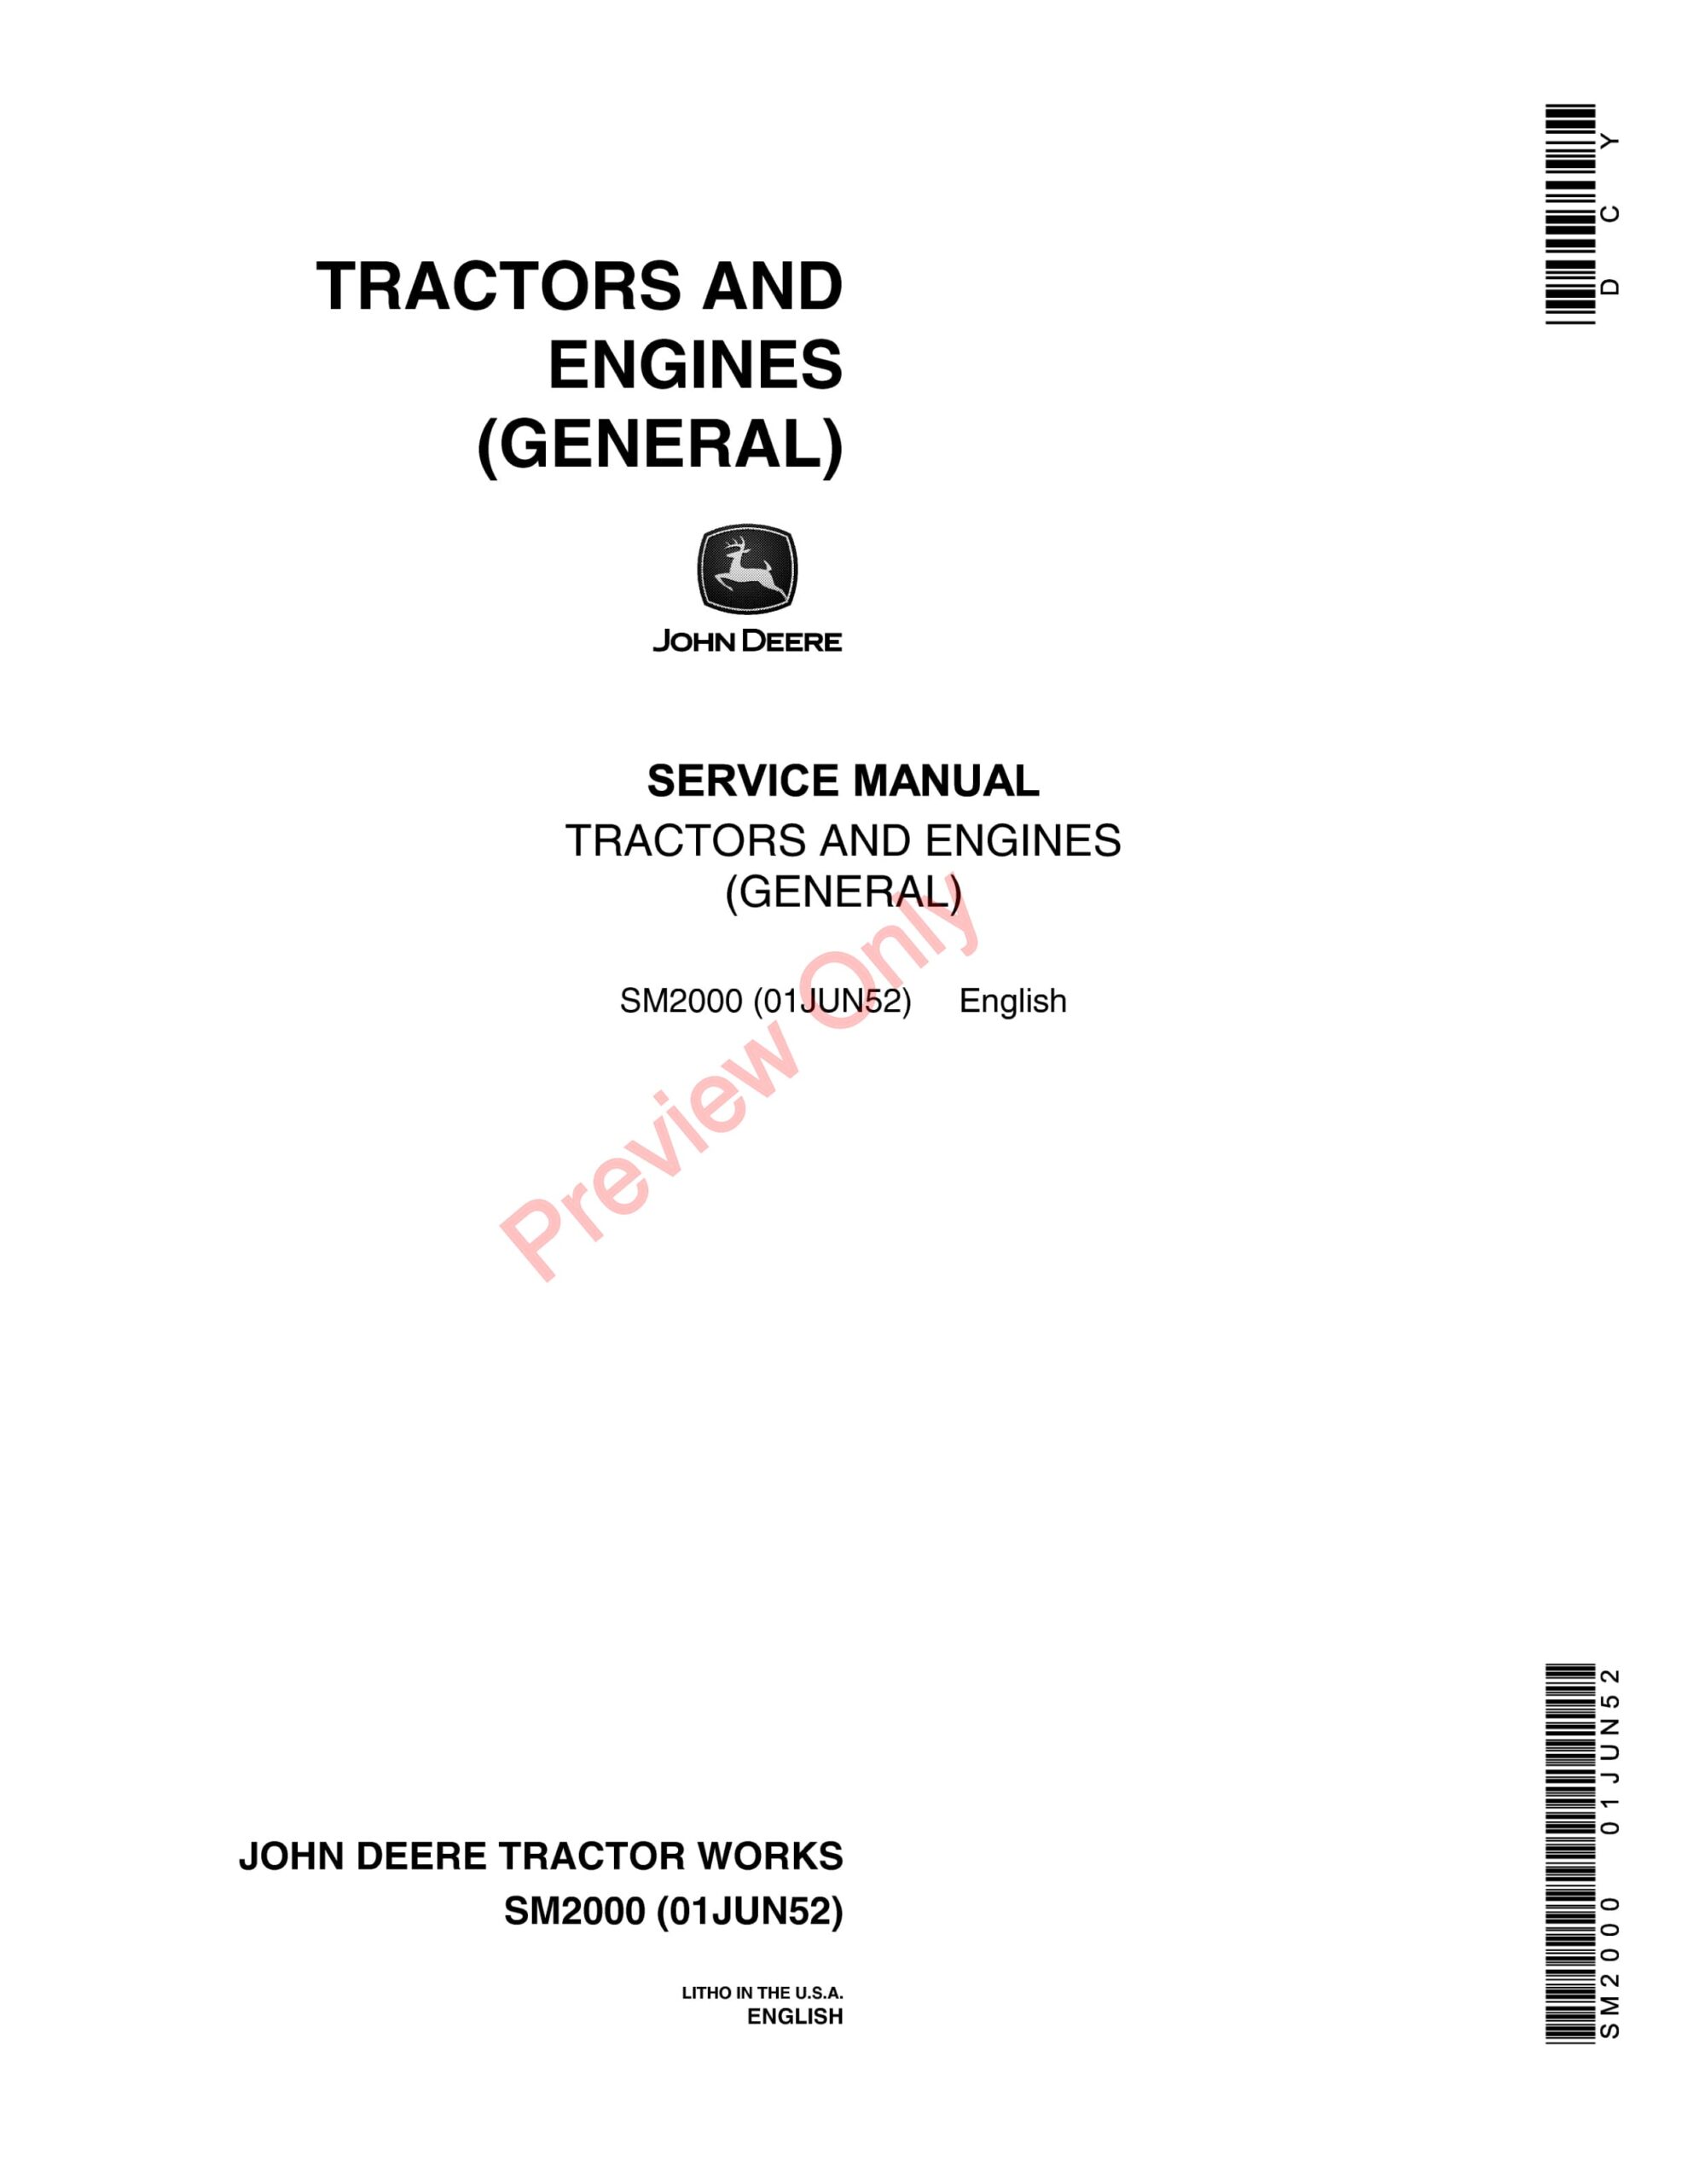 John Deere Tractors and Engines (Overview) Of Older Tractors Service Manual SM2000 01JUN52-1